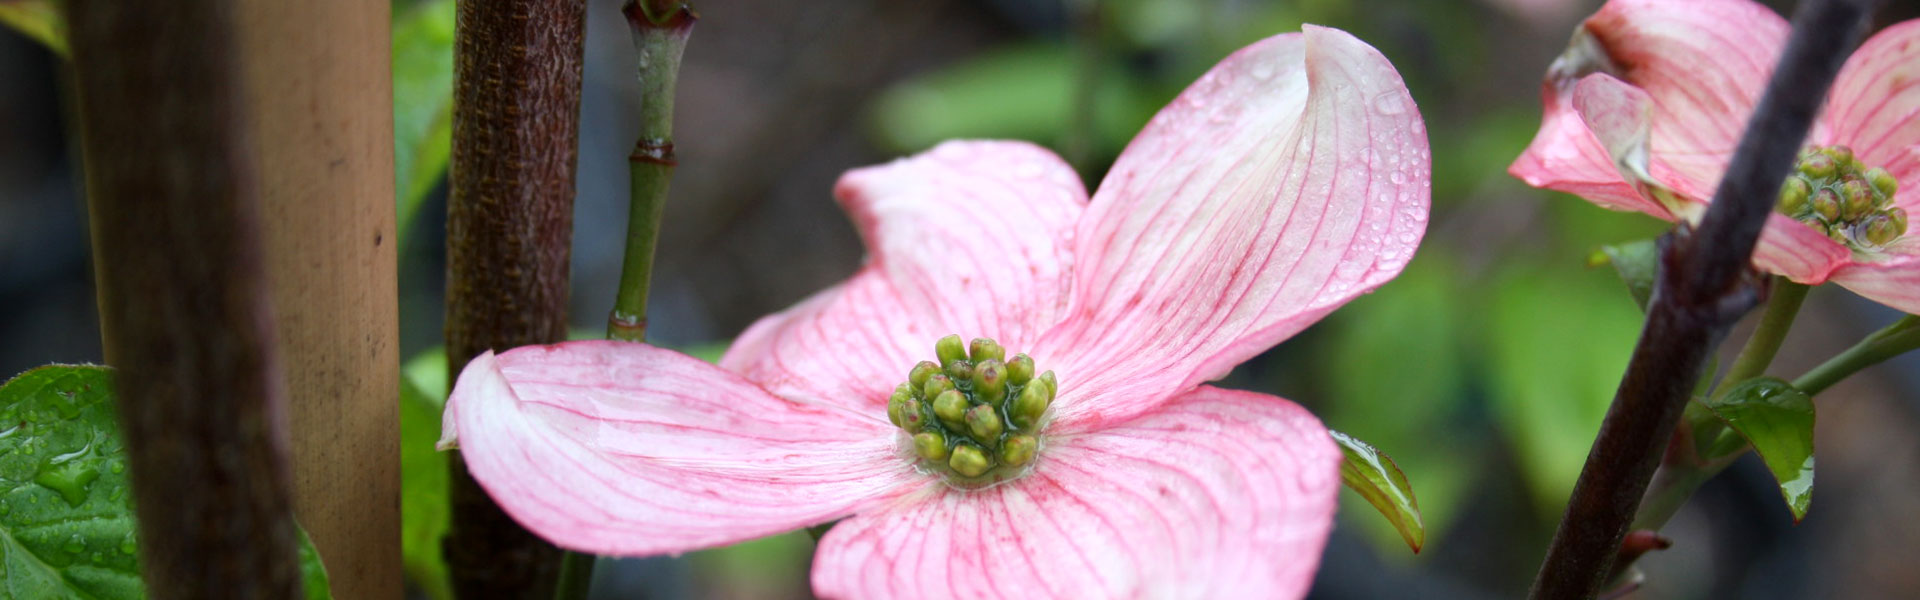  Macro photo of a Pink Dogwood flower